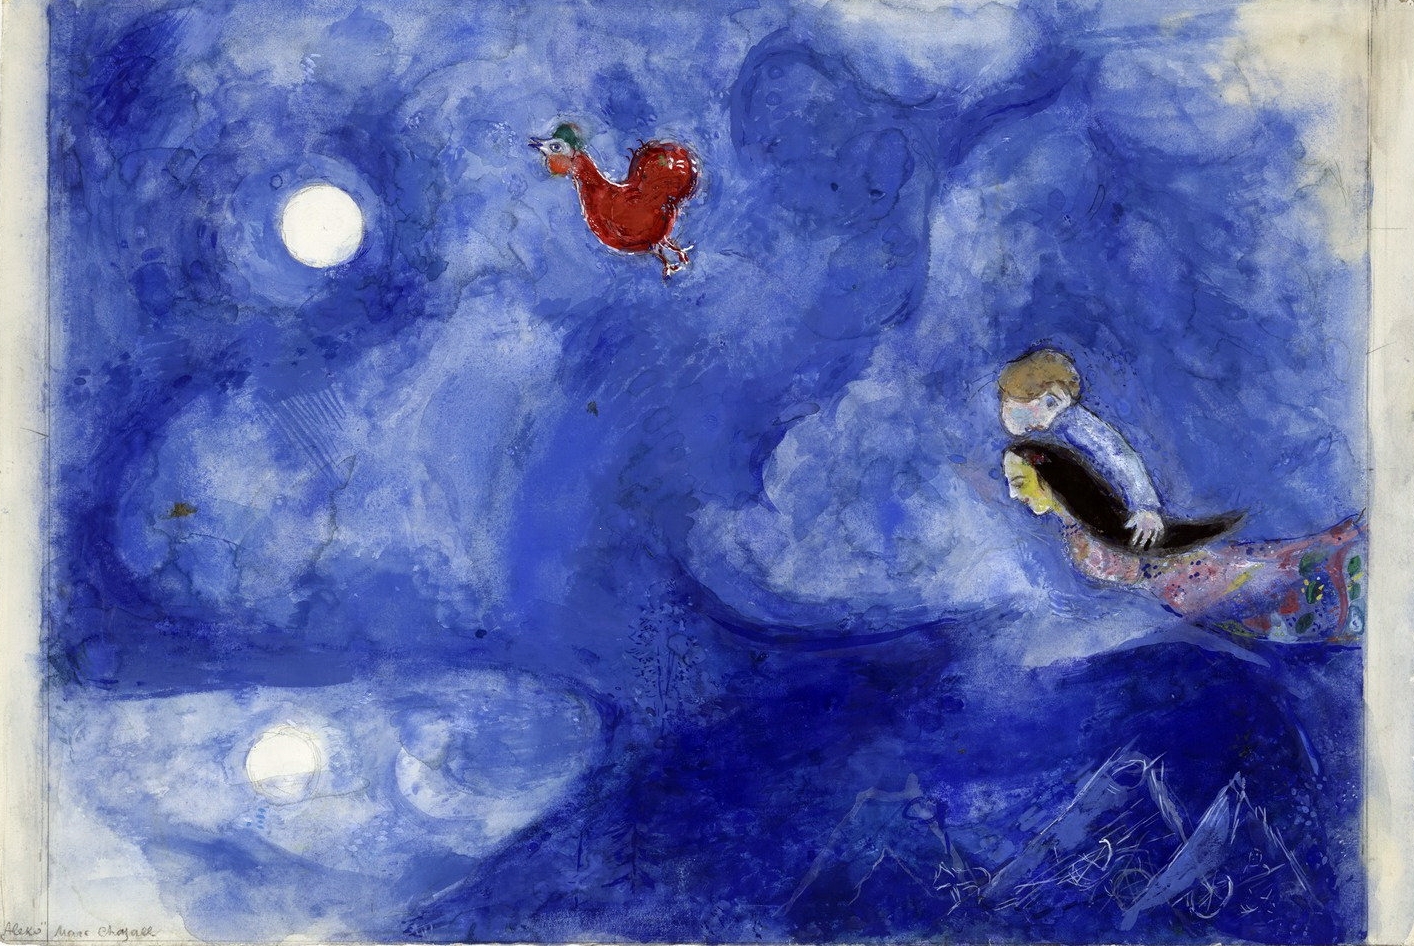 Marc+Chagall-1887-1985 (213).jpg